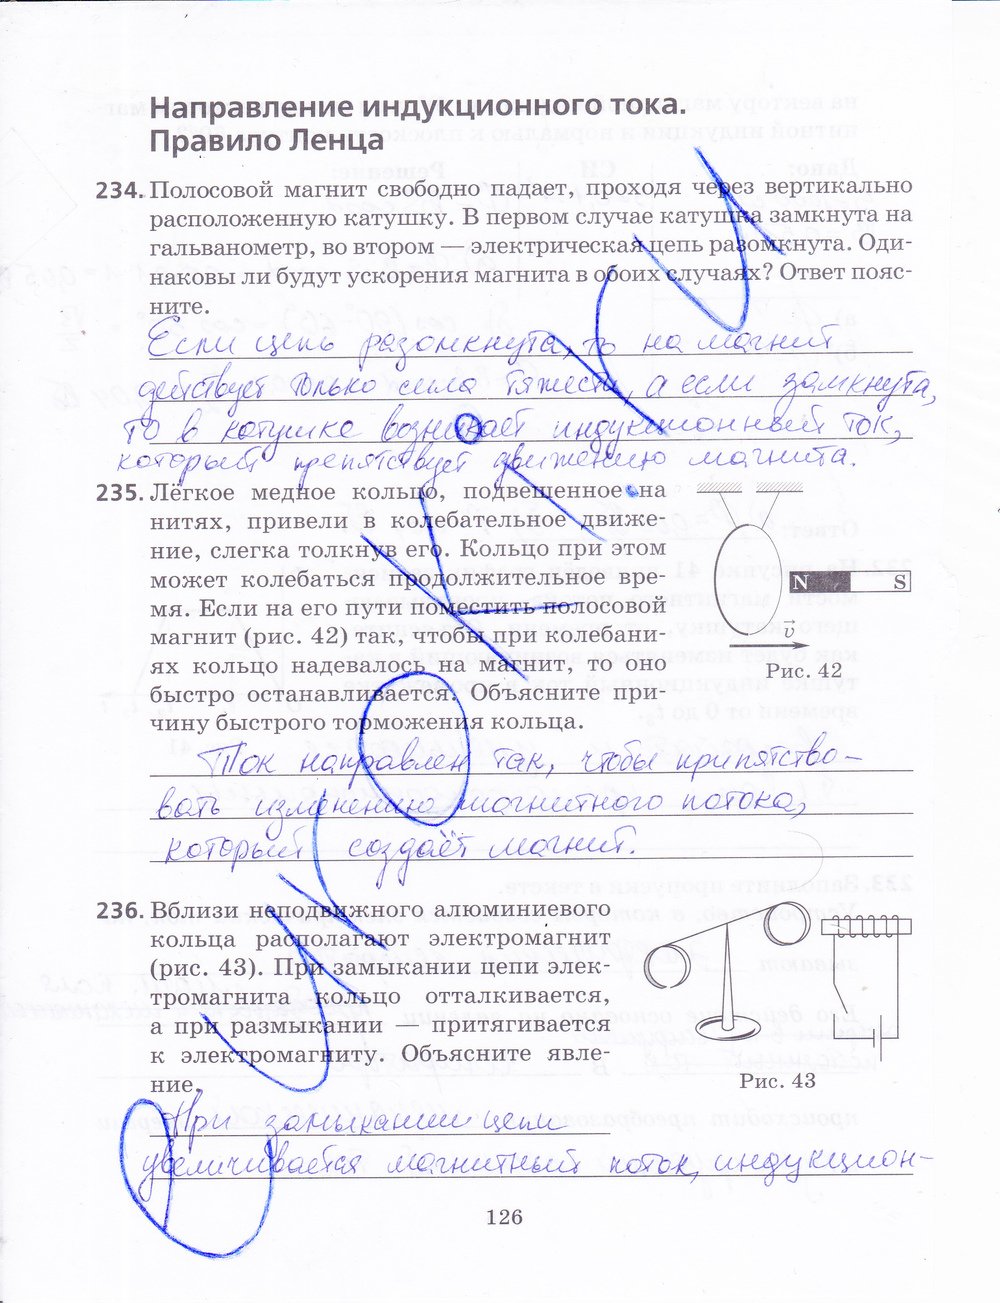 ГДЗ Физика Пурышева 9 класс Рабочая тетрадь Номер стр. 126